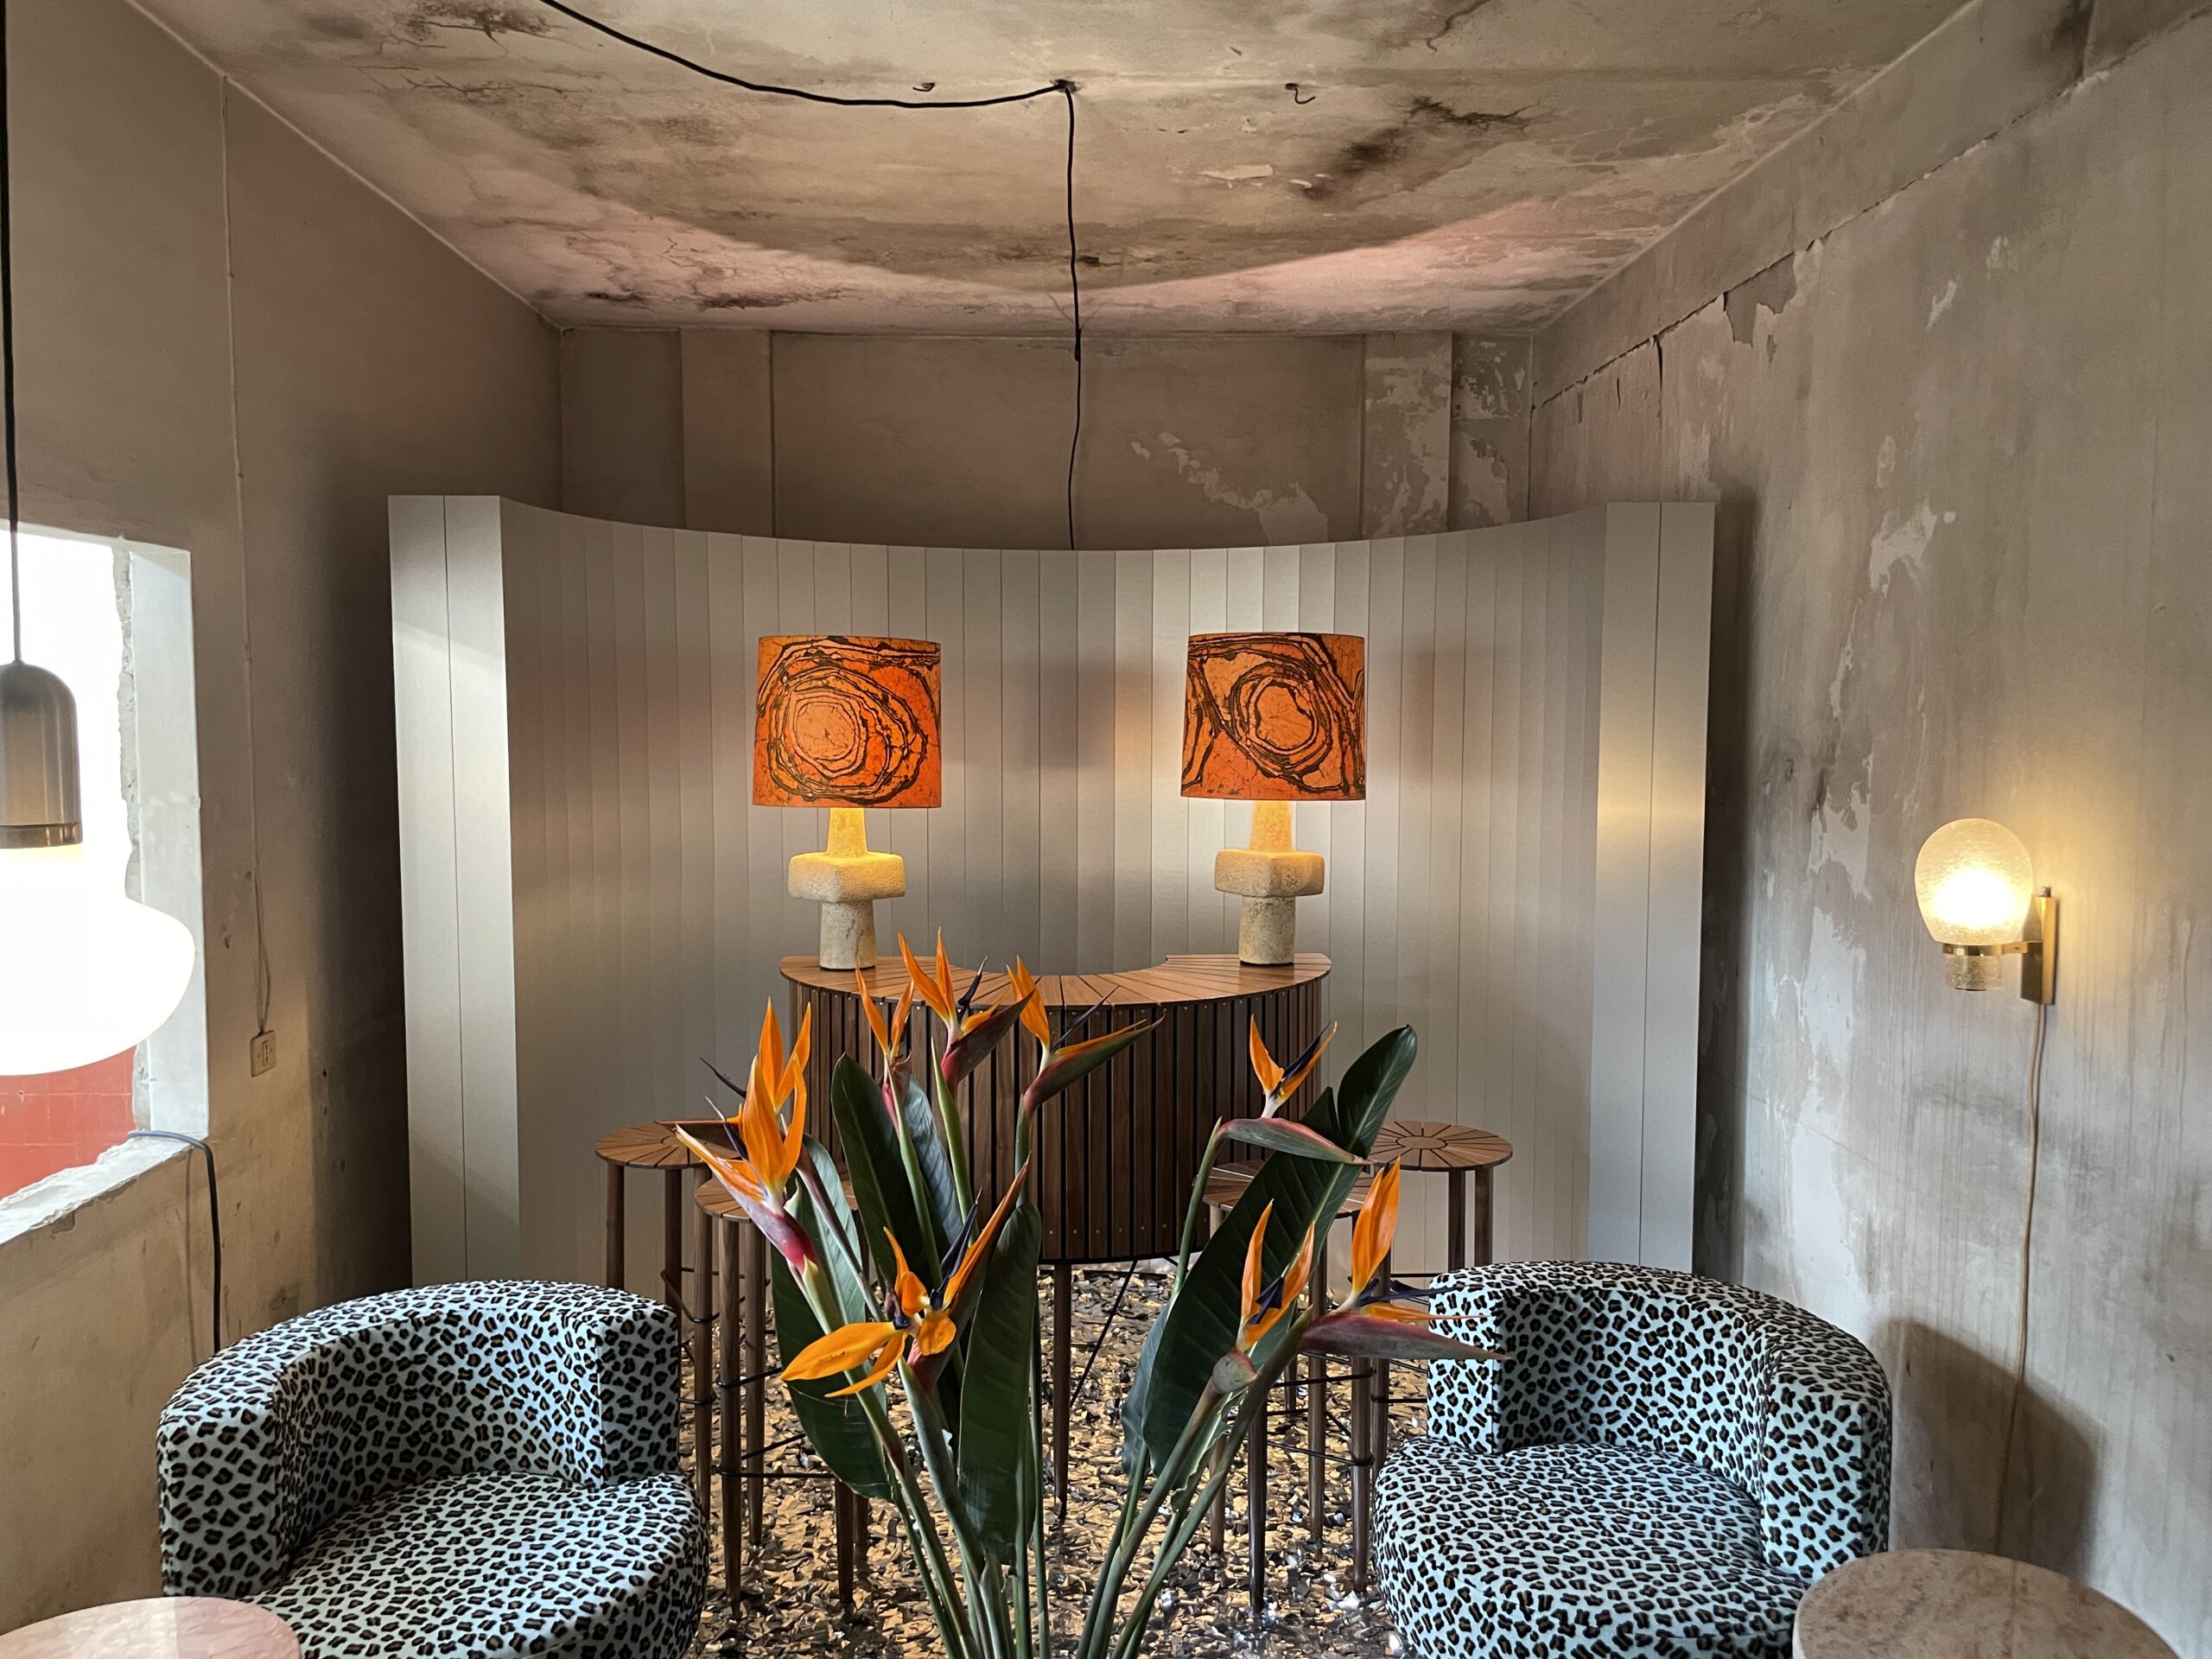 Fabian Freytag Studio features furniture and lighting